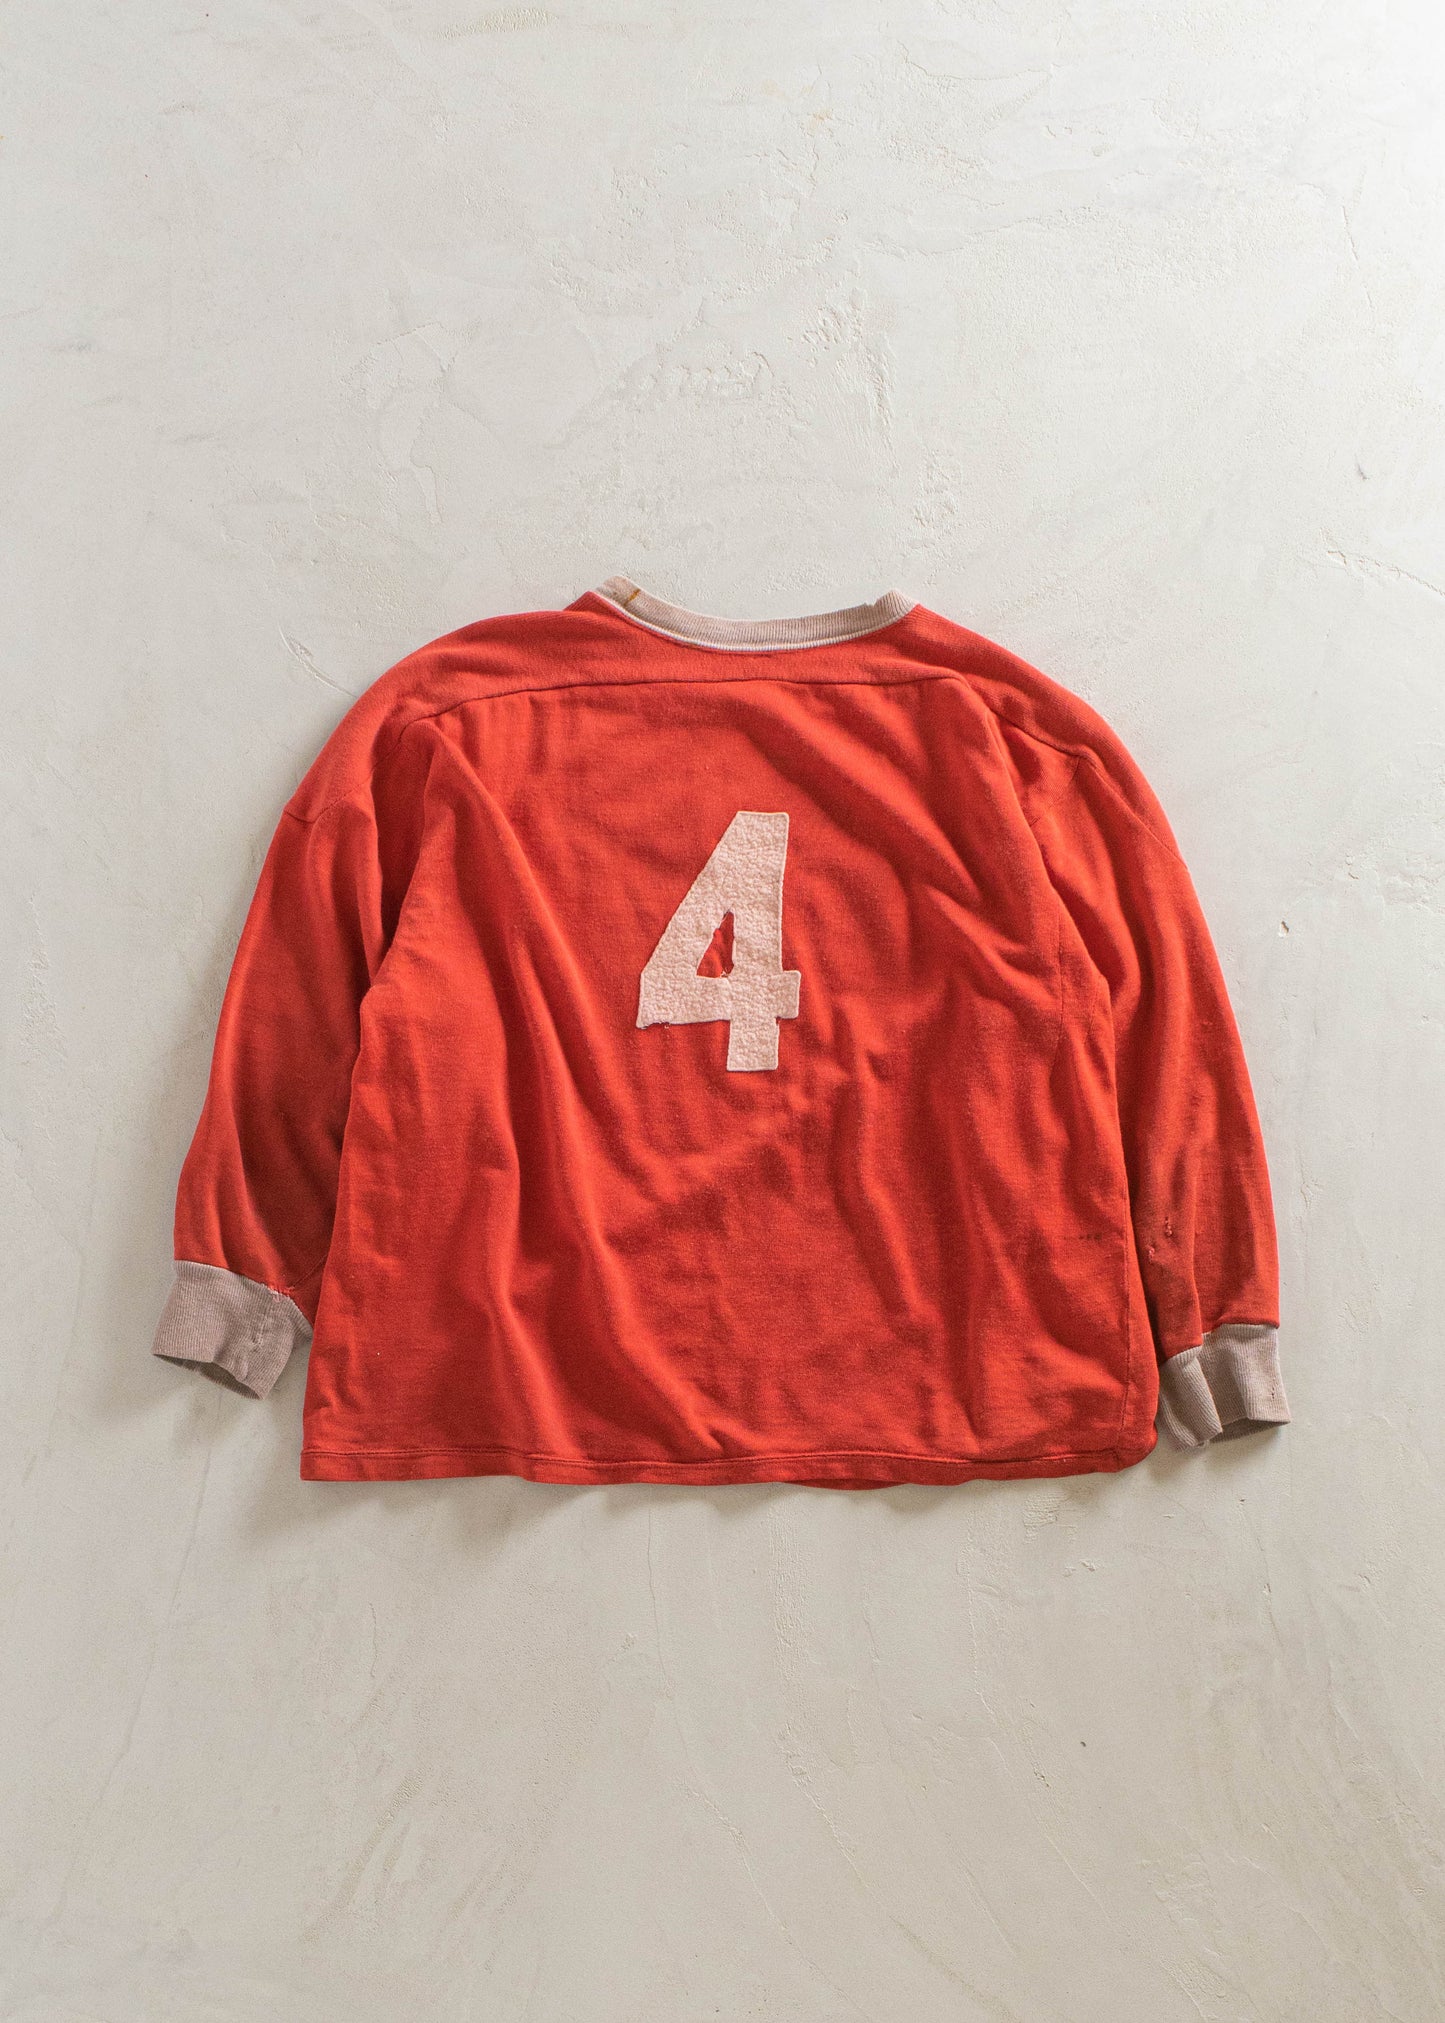 1960s Ecole Secondaire Albert Gariepy 3/4 Sleeve Sport Jersey Size M/L